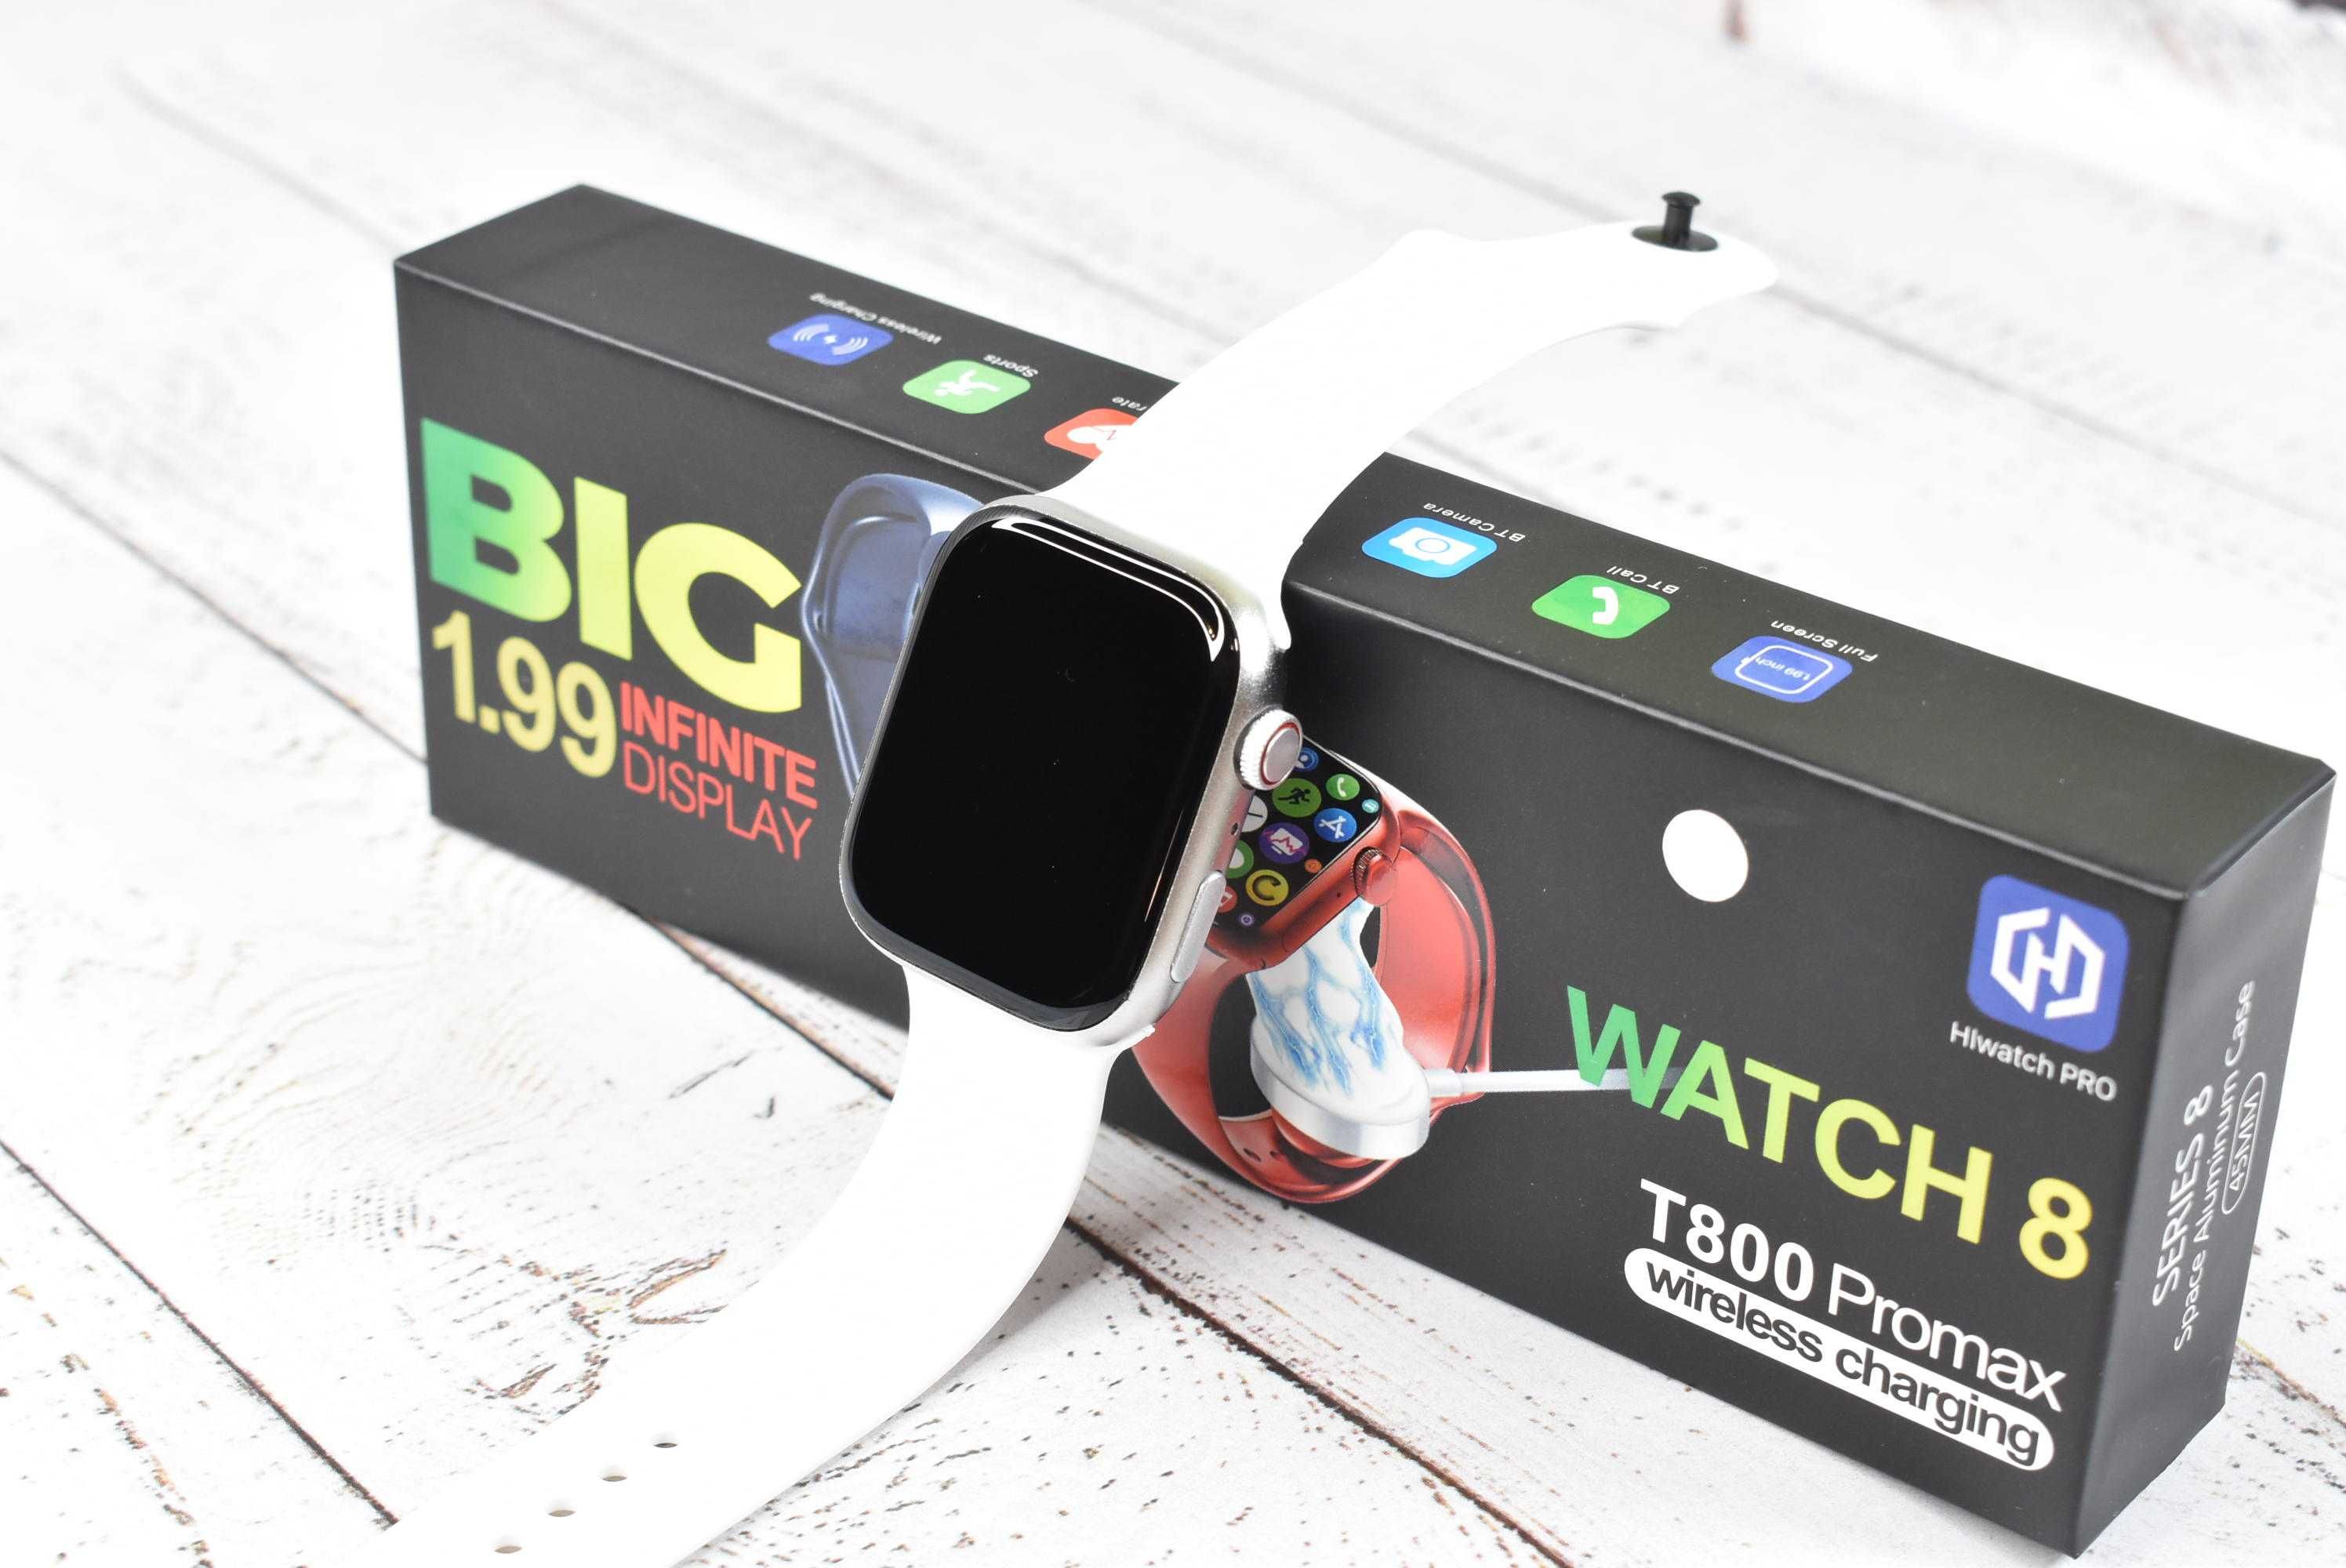 Смарт годинник Т800 Promax Smart watch 8 wireless charging White